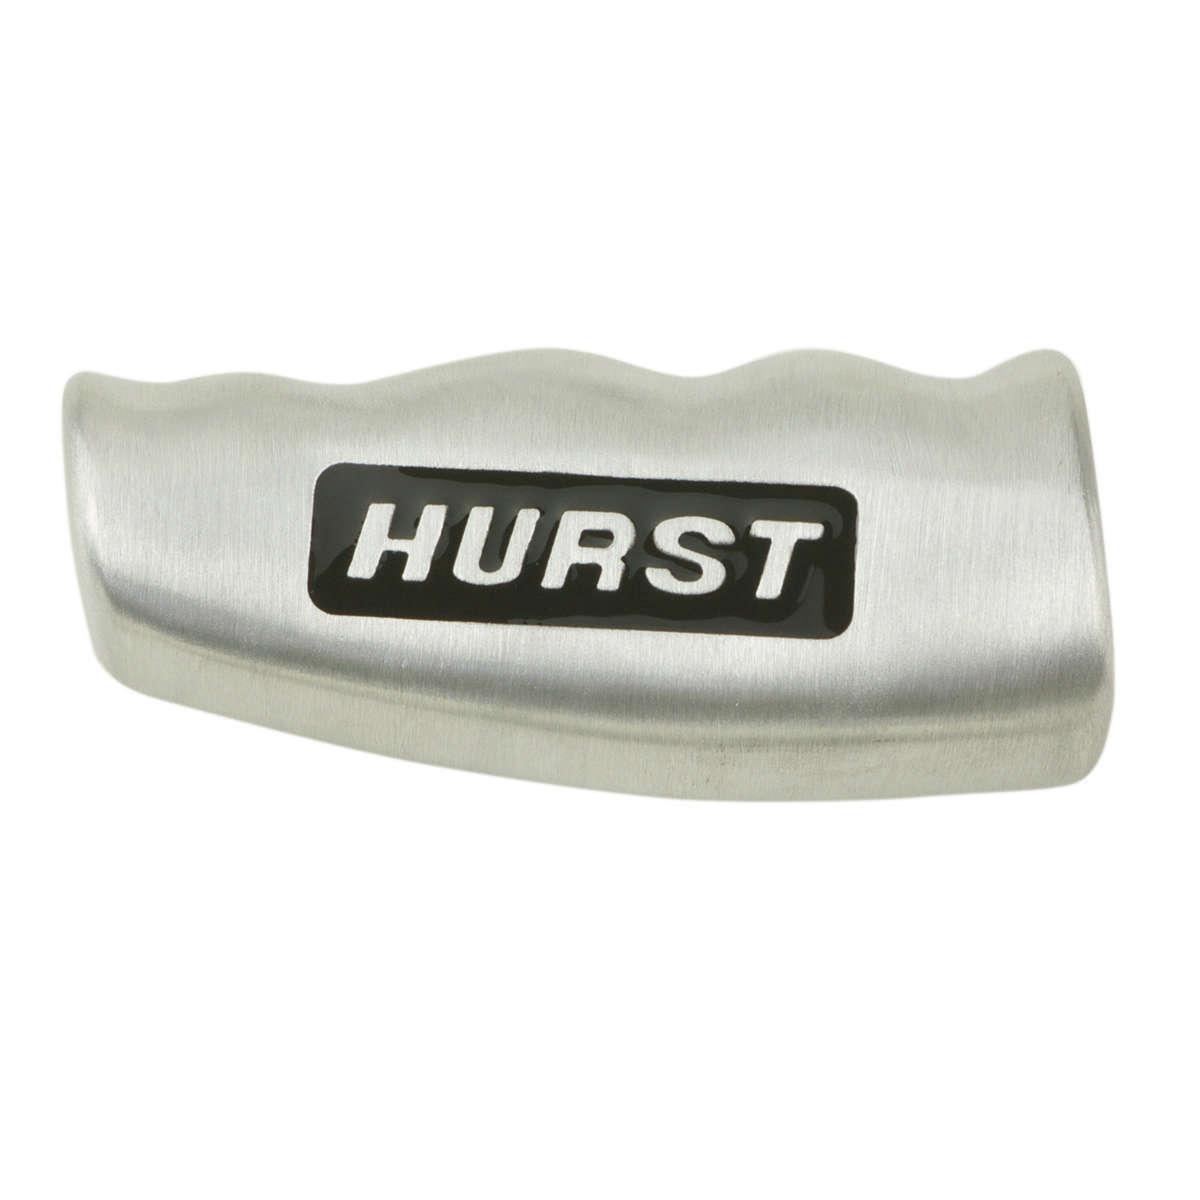 Hurst 153-0020 Shifter Knob, T-Handle, 3/8-16, 7/16-20, 1/2-20 in, 10 mm x 1.25, 10 mm x 1.5, 12 mm x 1.25, 12 mm x 1.75, 16 mm x 1.5 Thread, Hurst Logo, Aluminum, Brushed, Universal, Each